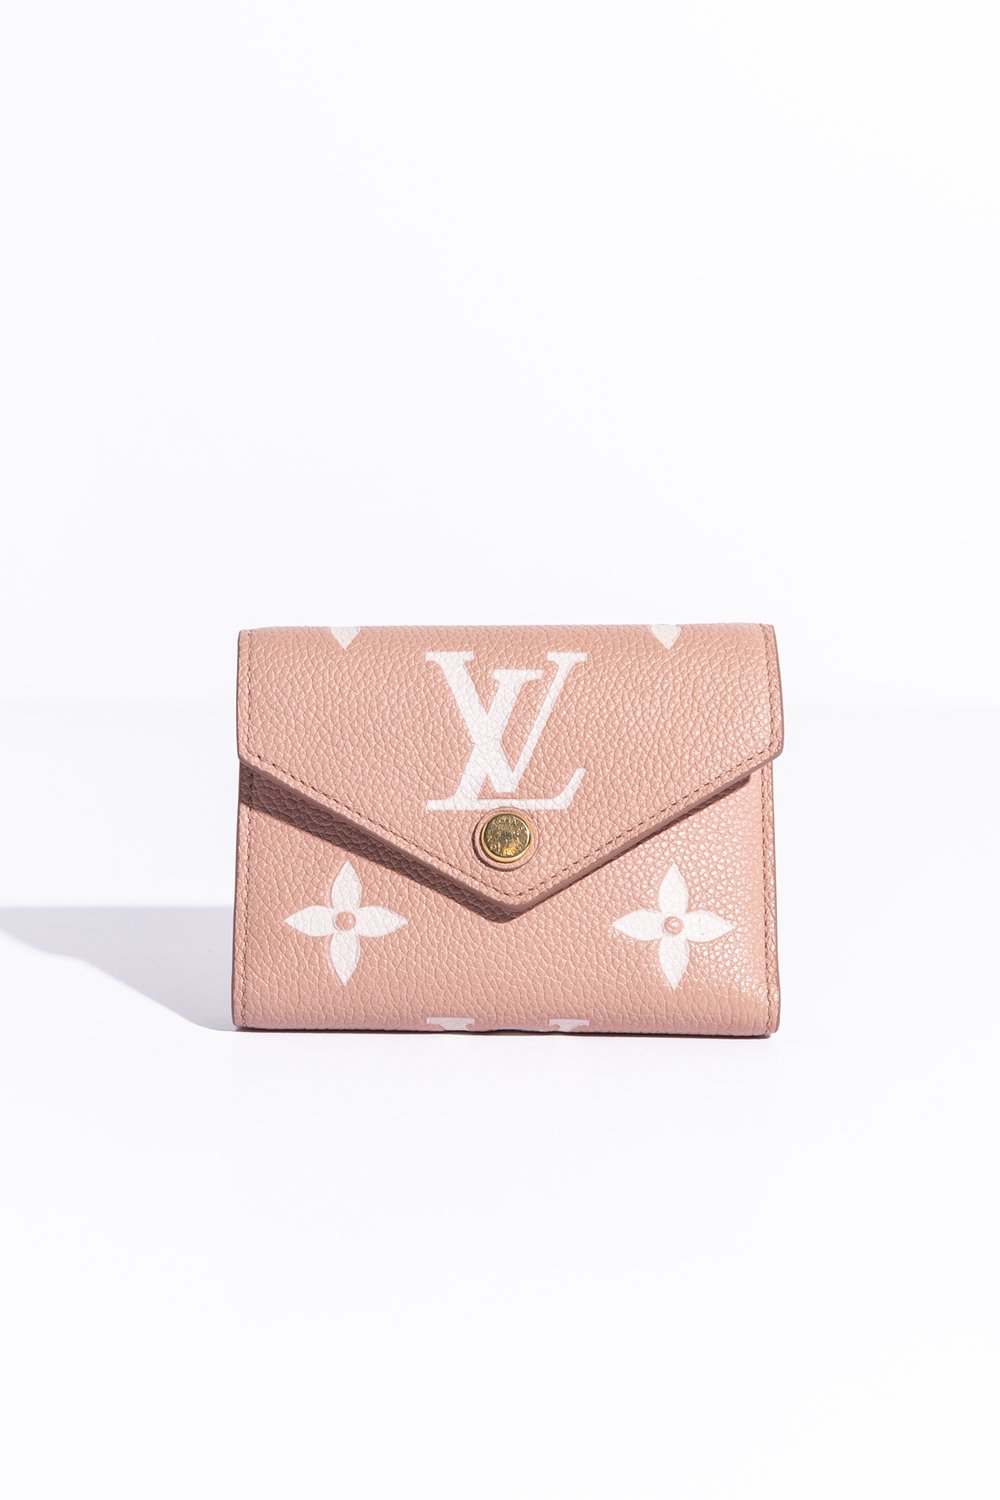 Louis Vuitton 2017 Monogram Zipped Cardholder - Brown Wallets